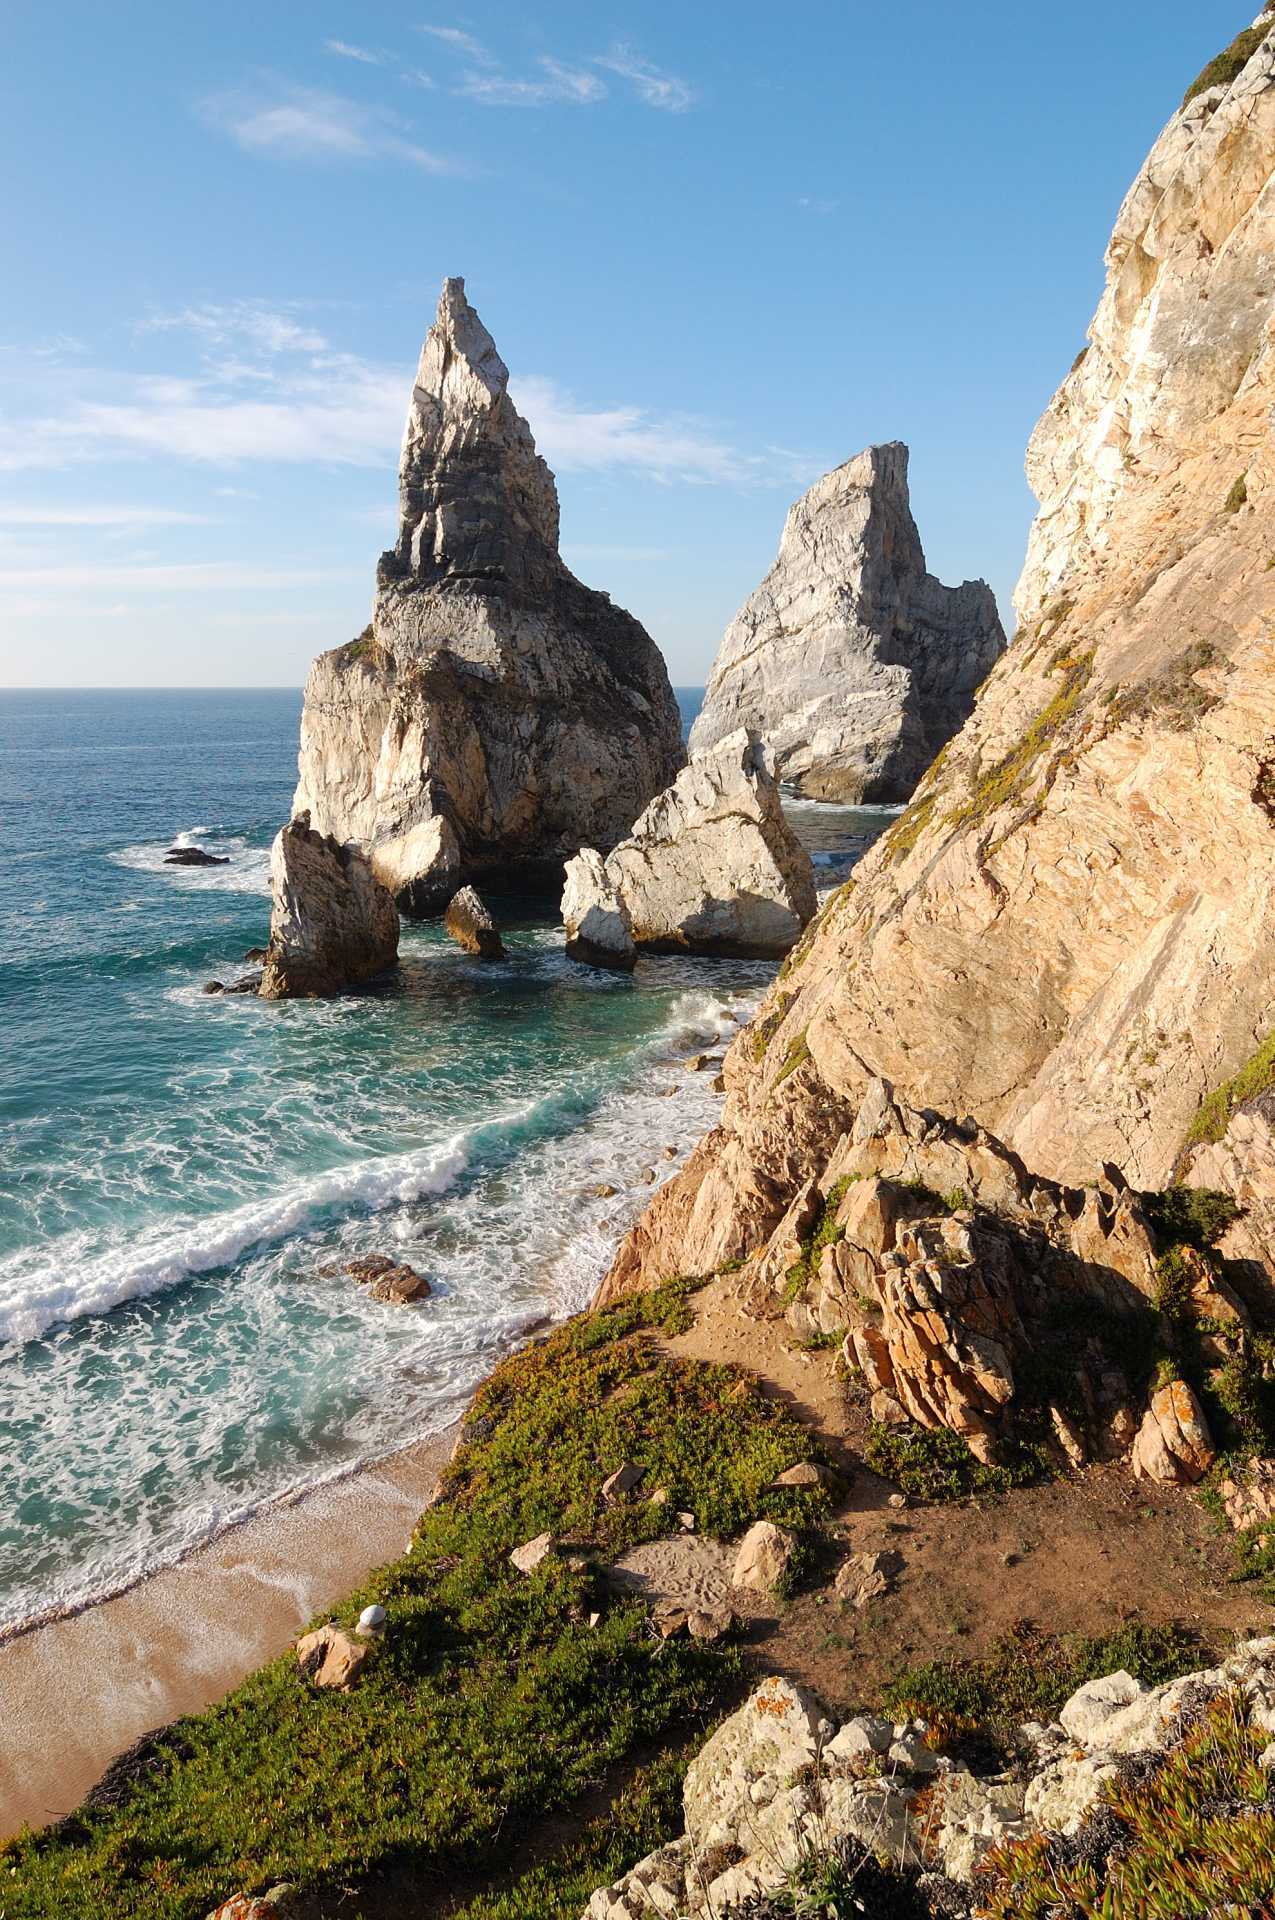 The rocks at Praia da Ursa, Portugal